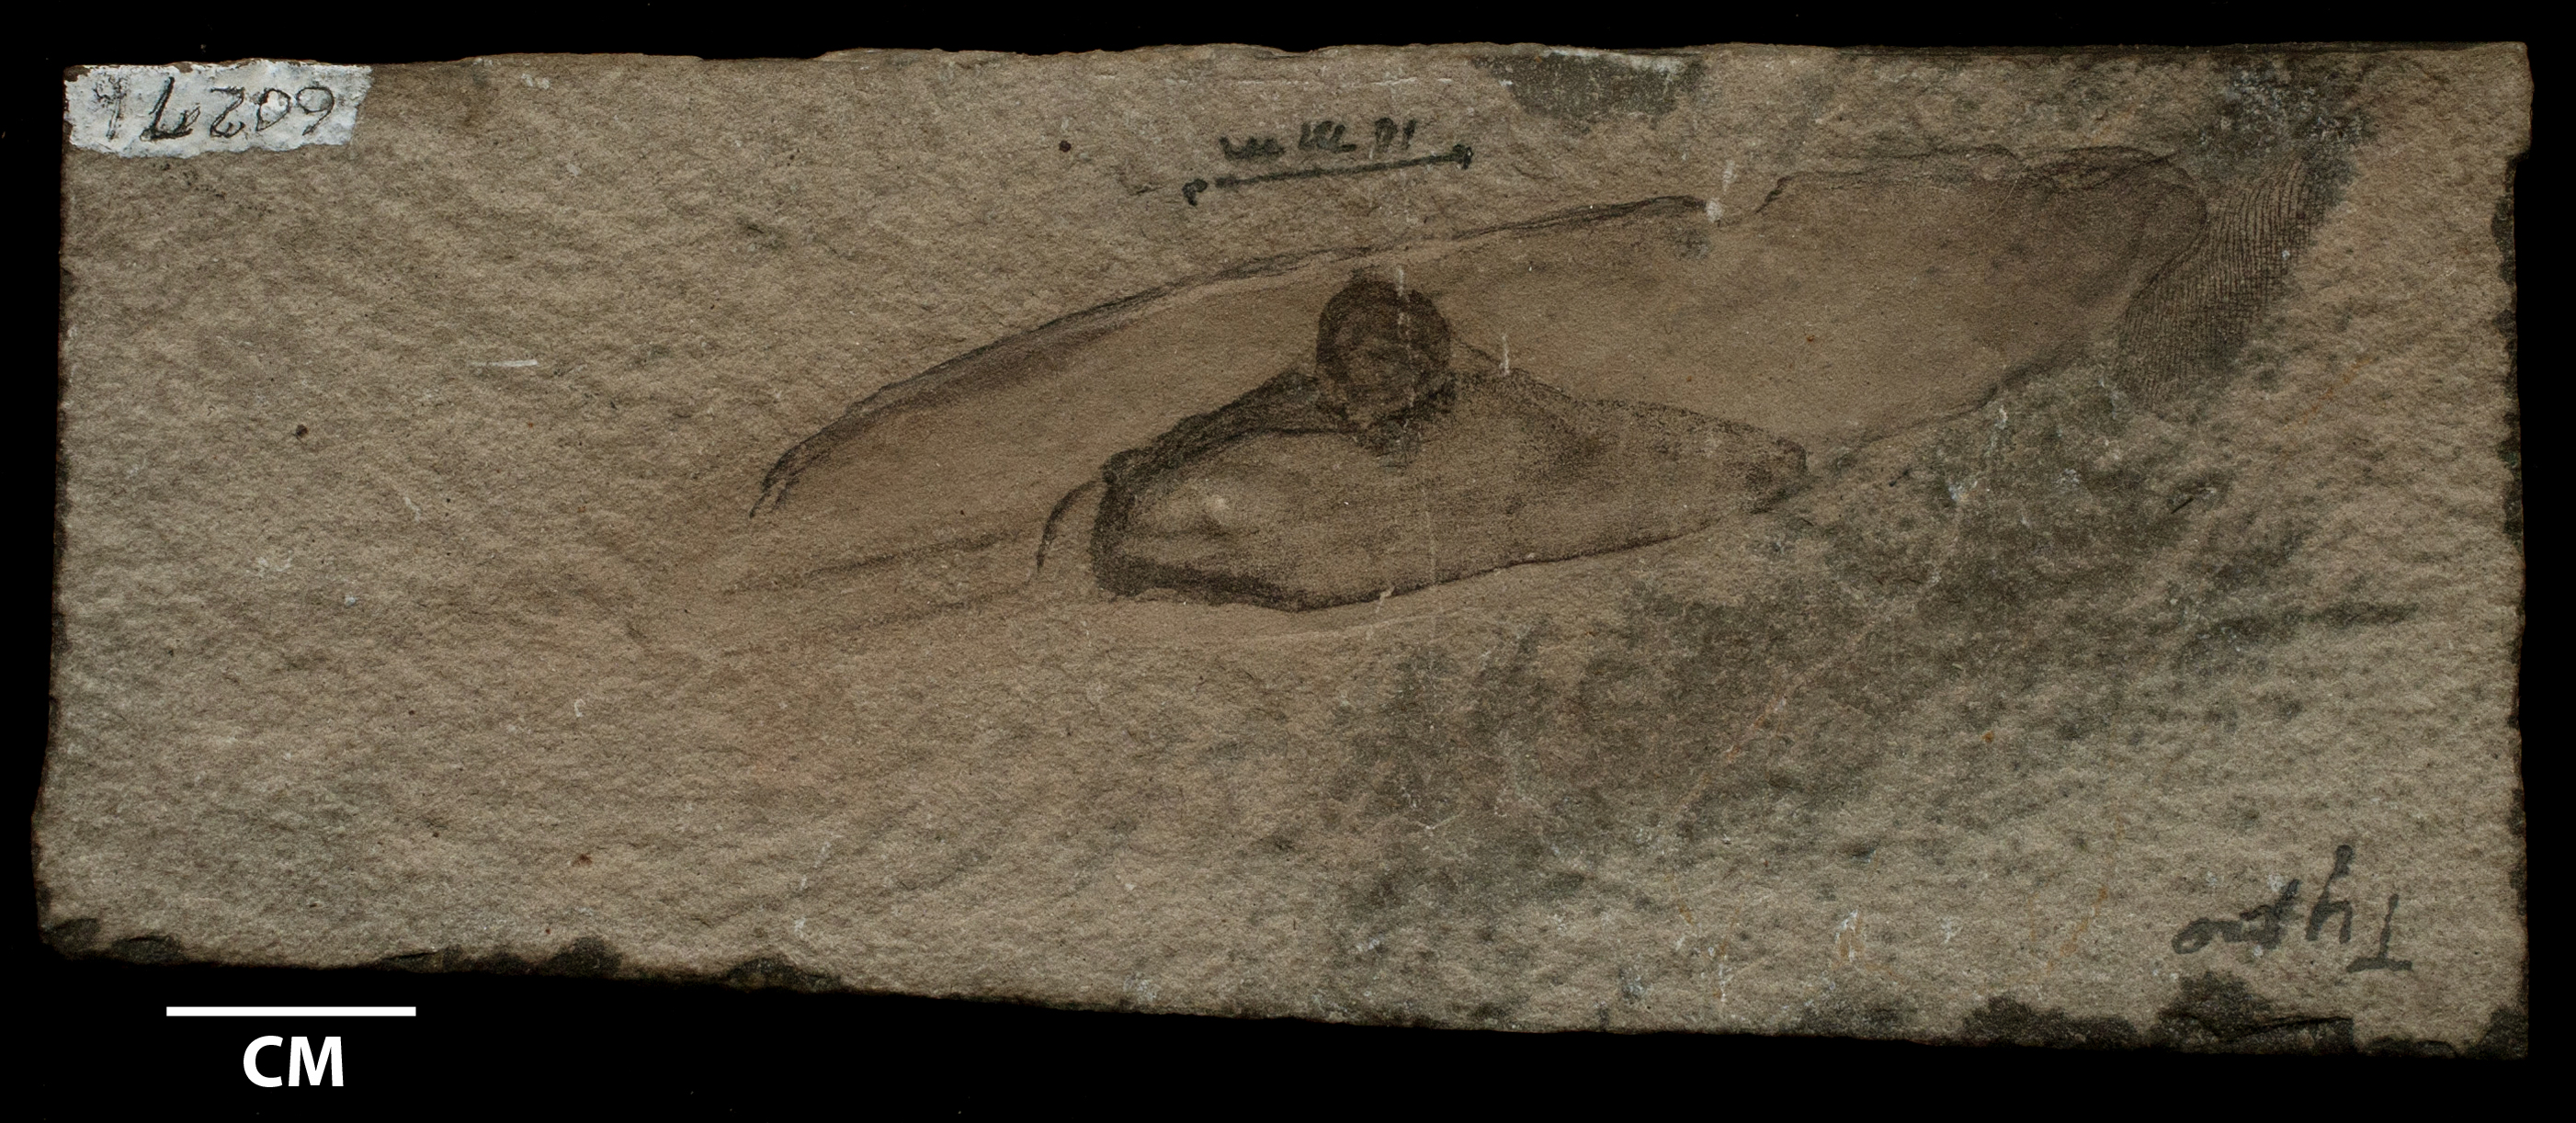 Specimen: Typhloesus wellsi, UMPC 6027B, the enigmatic conodont-eating animal from the 320 million year old Bear Gulch Limestone.